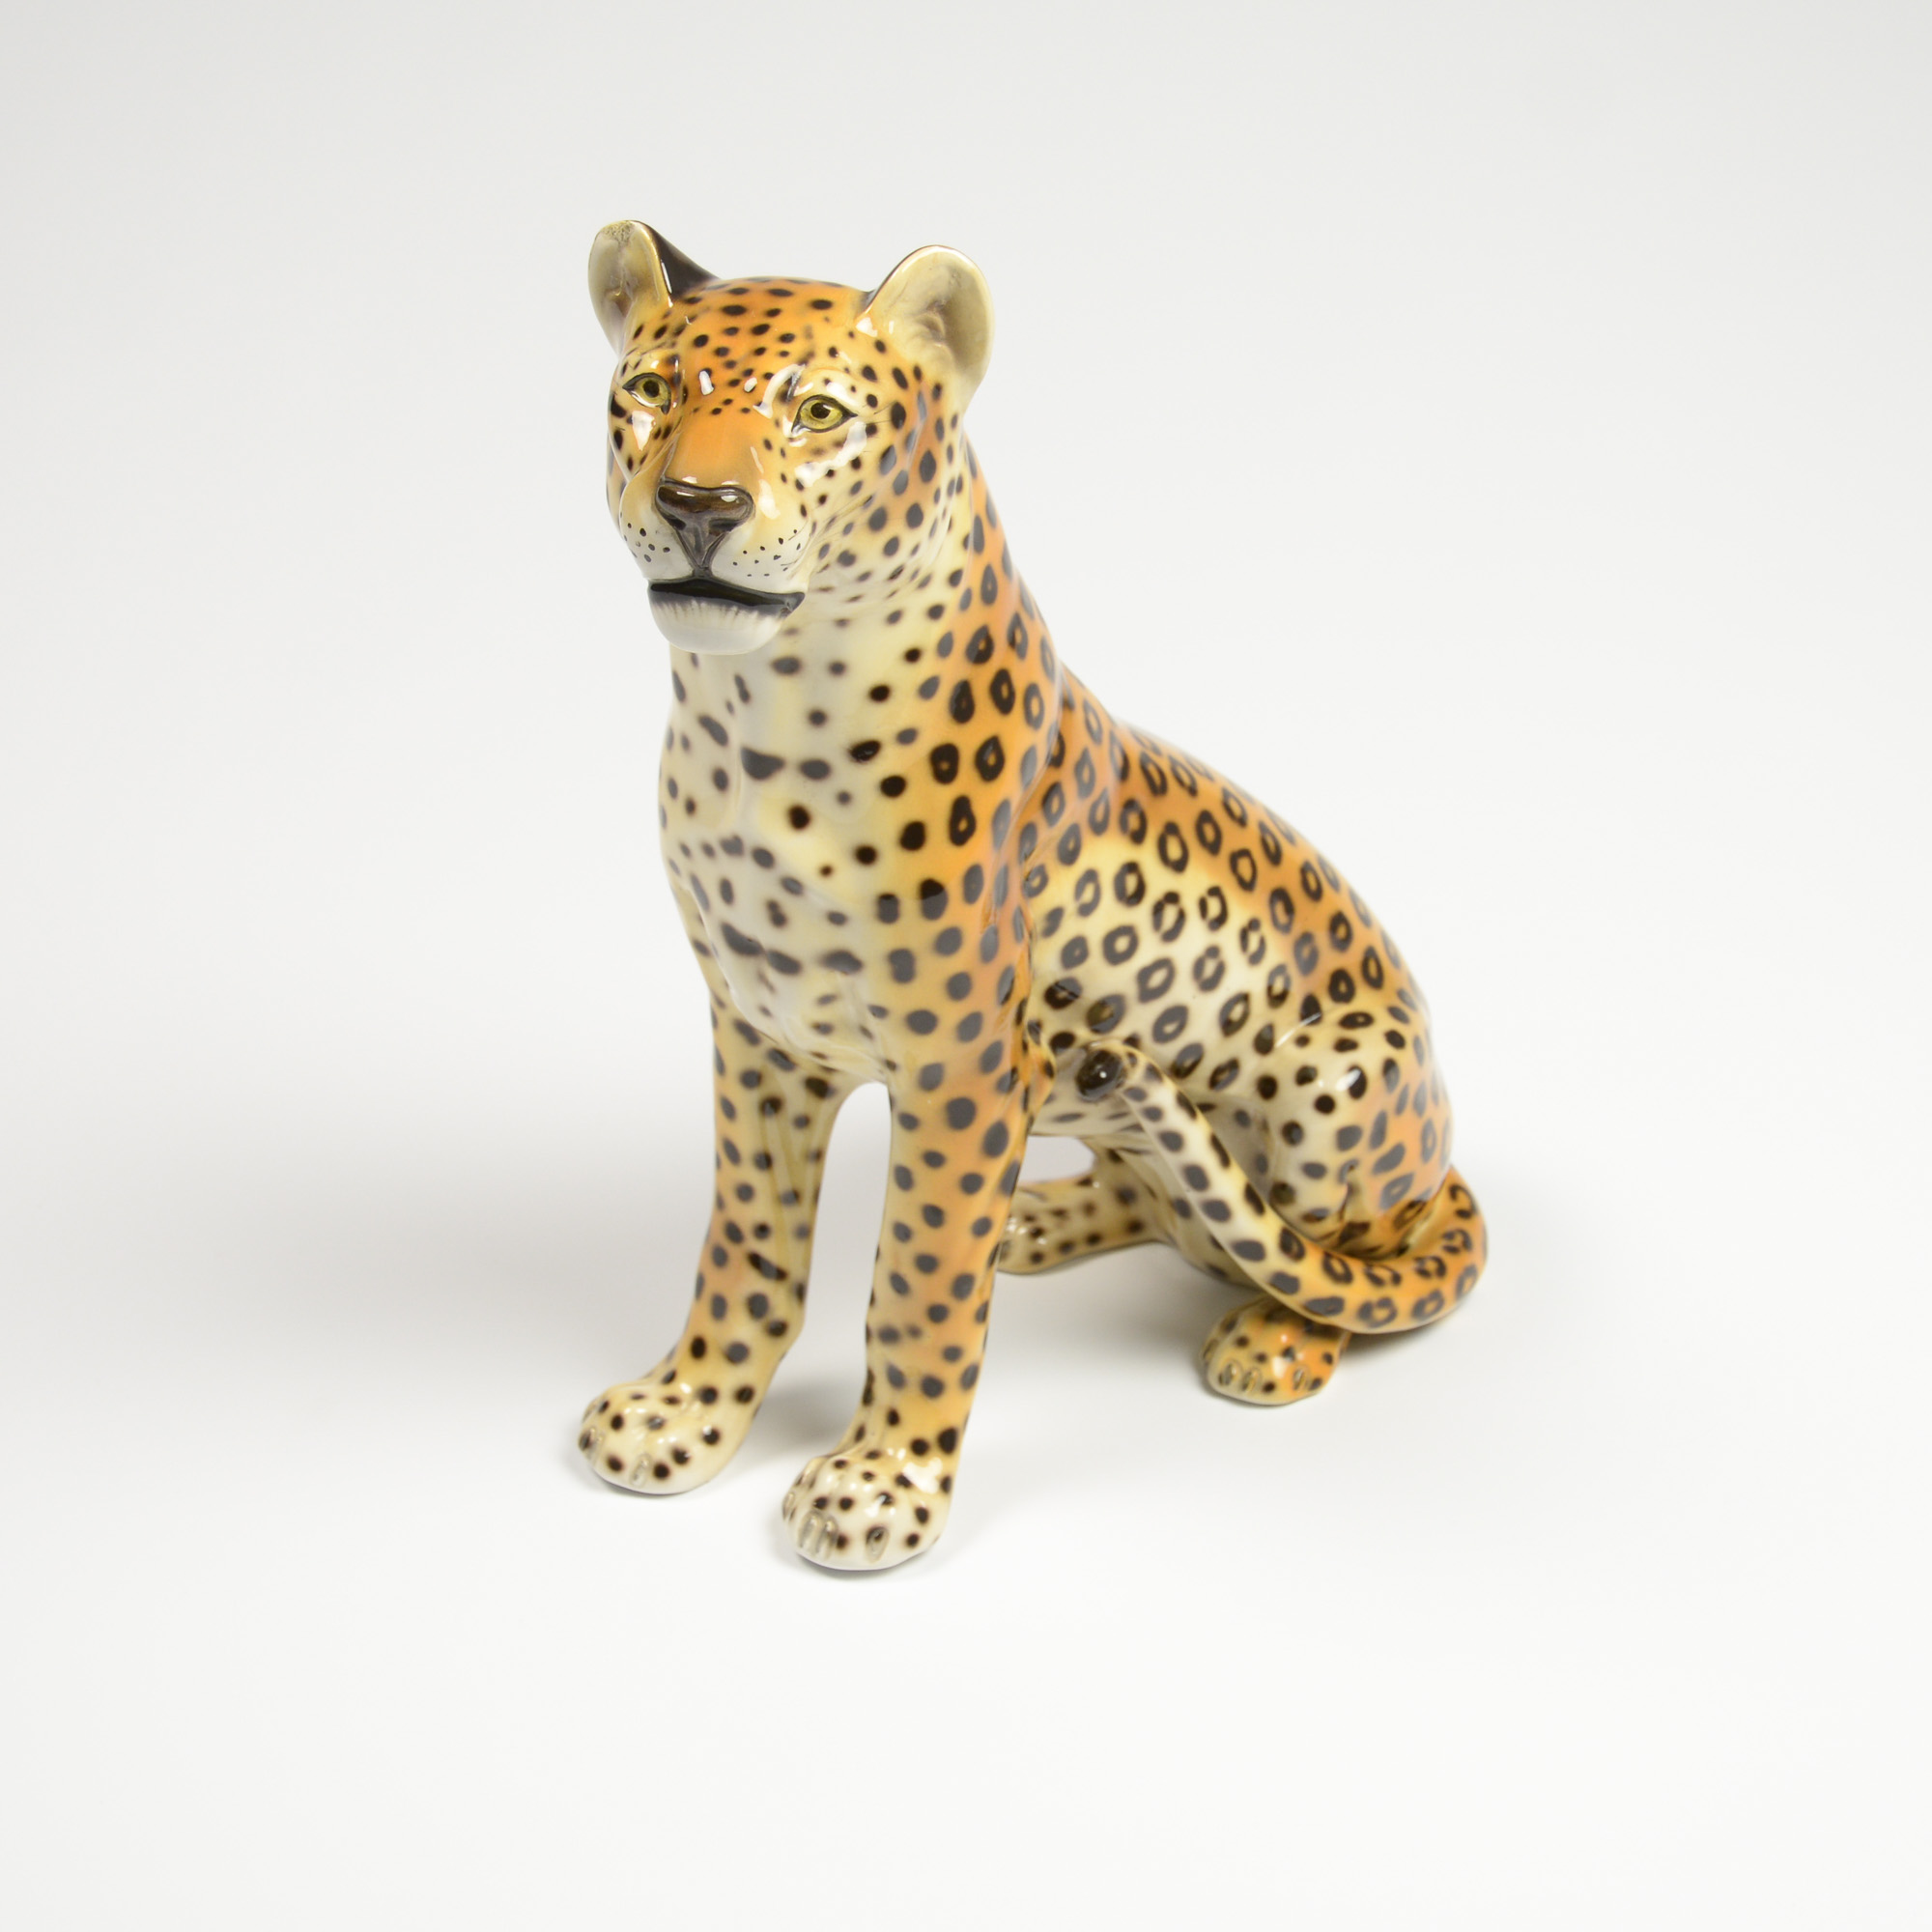 Porcelain Sculpture of a Leopard by Ronzan, Italy - Vintage Design 